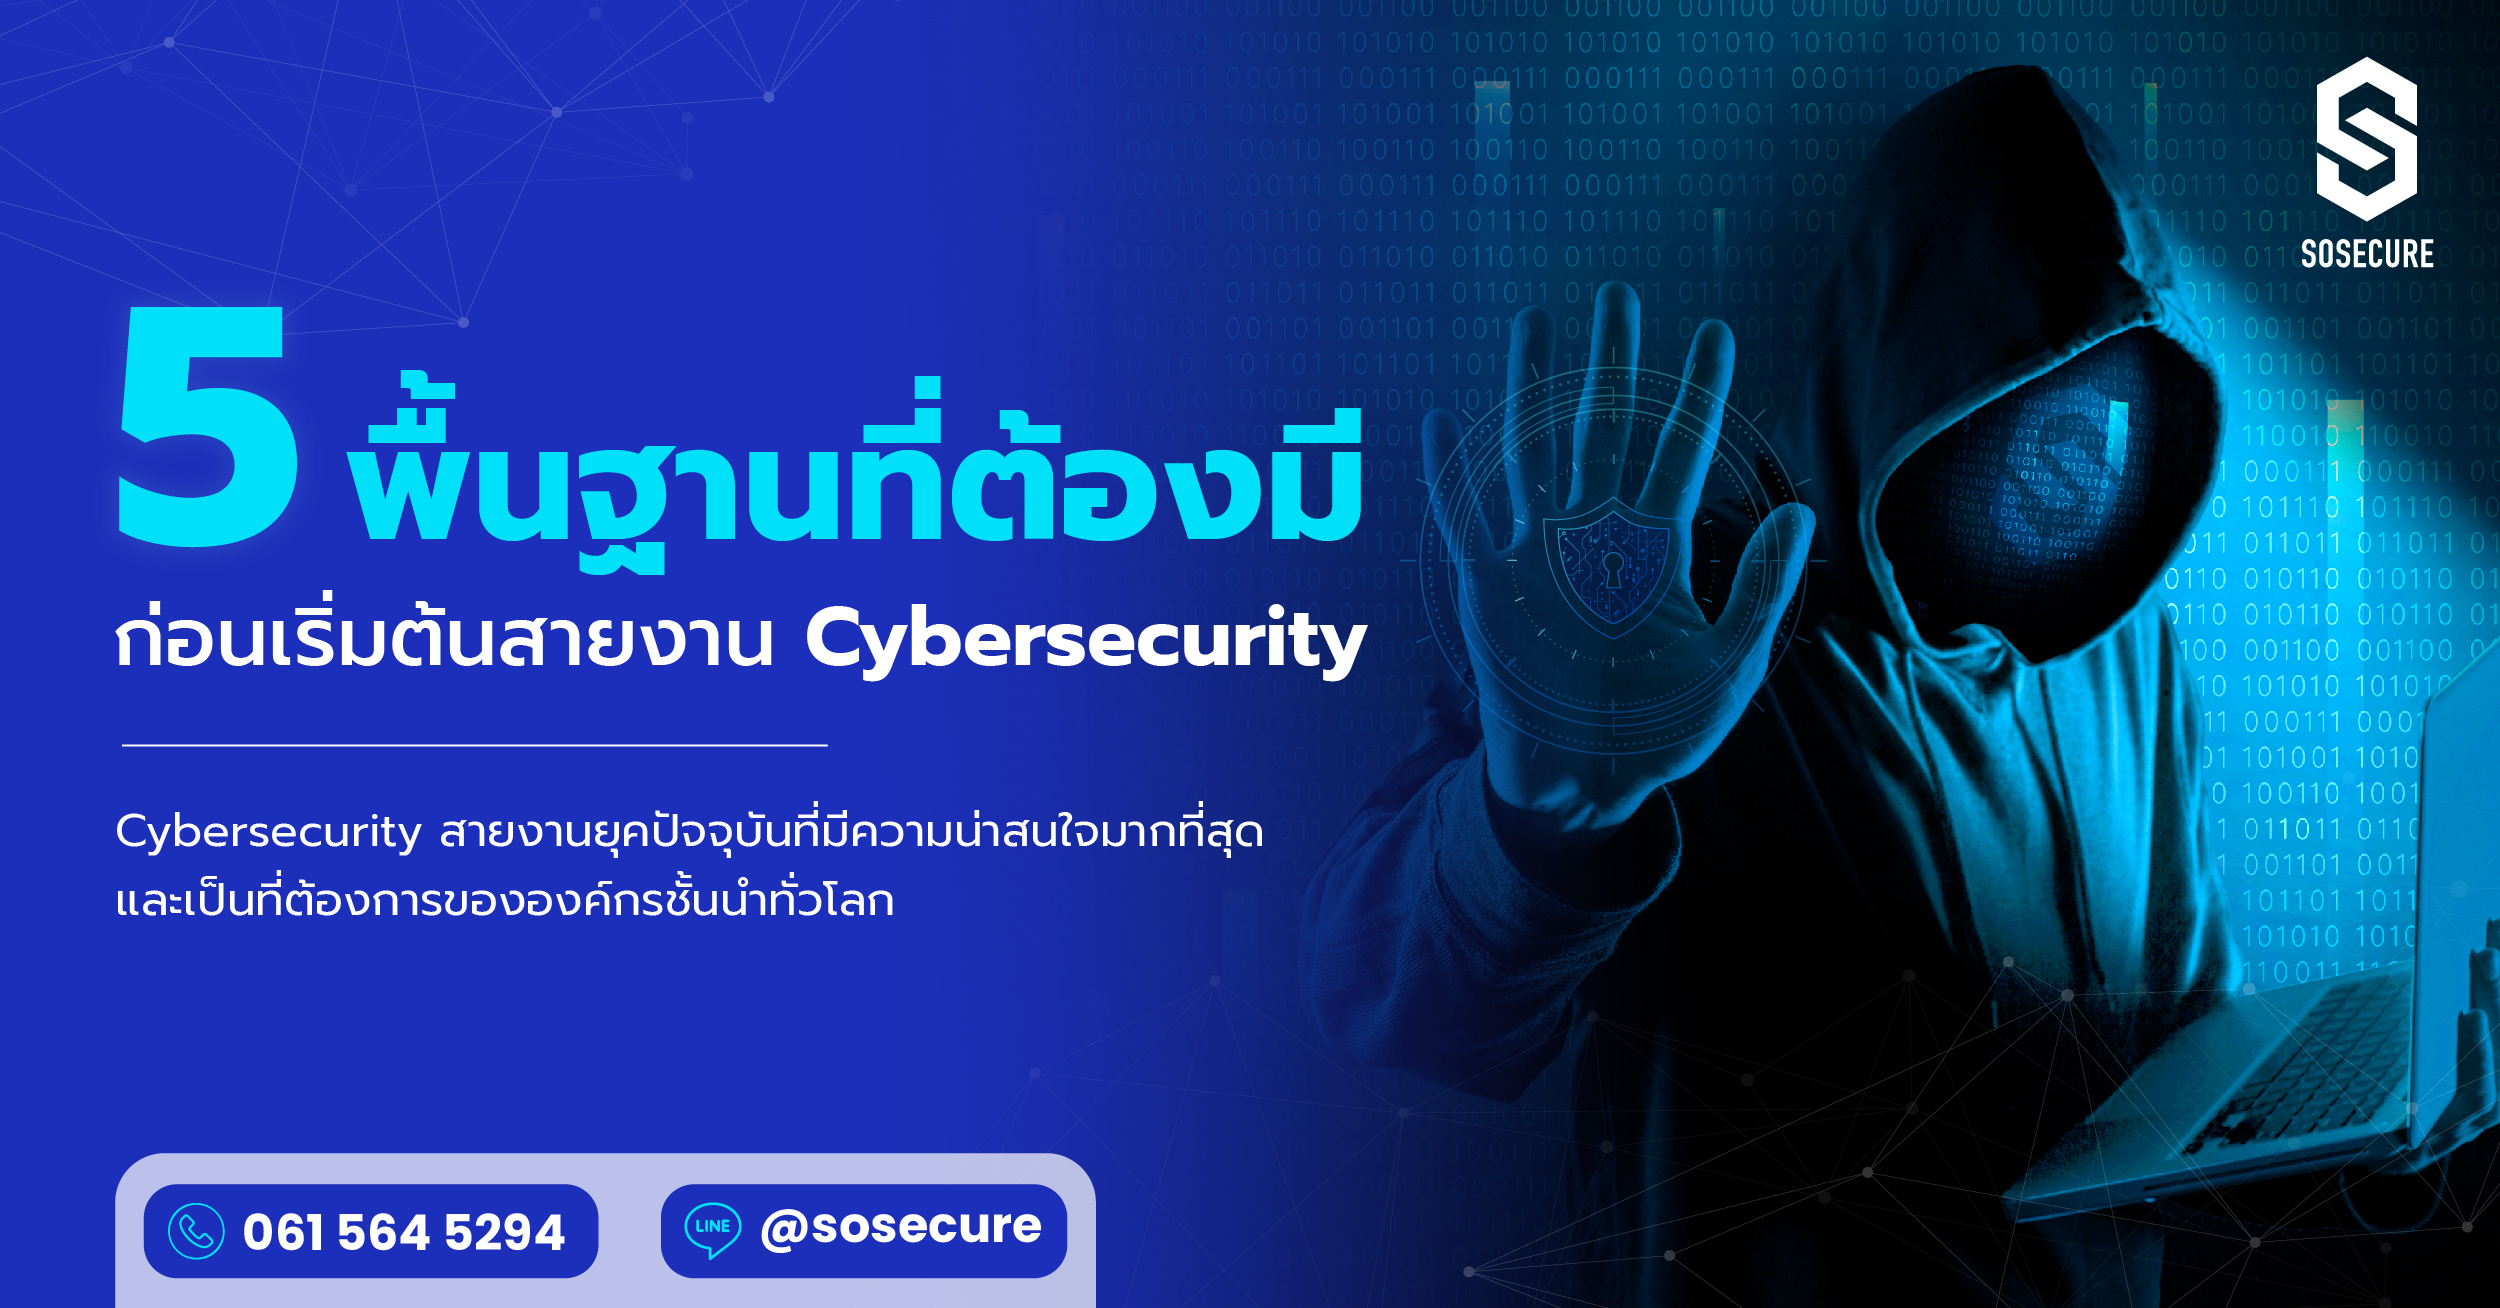 Cybersecurity basic